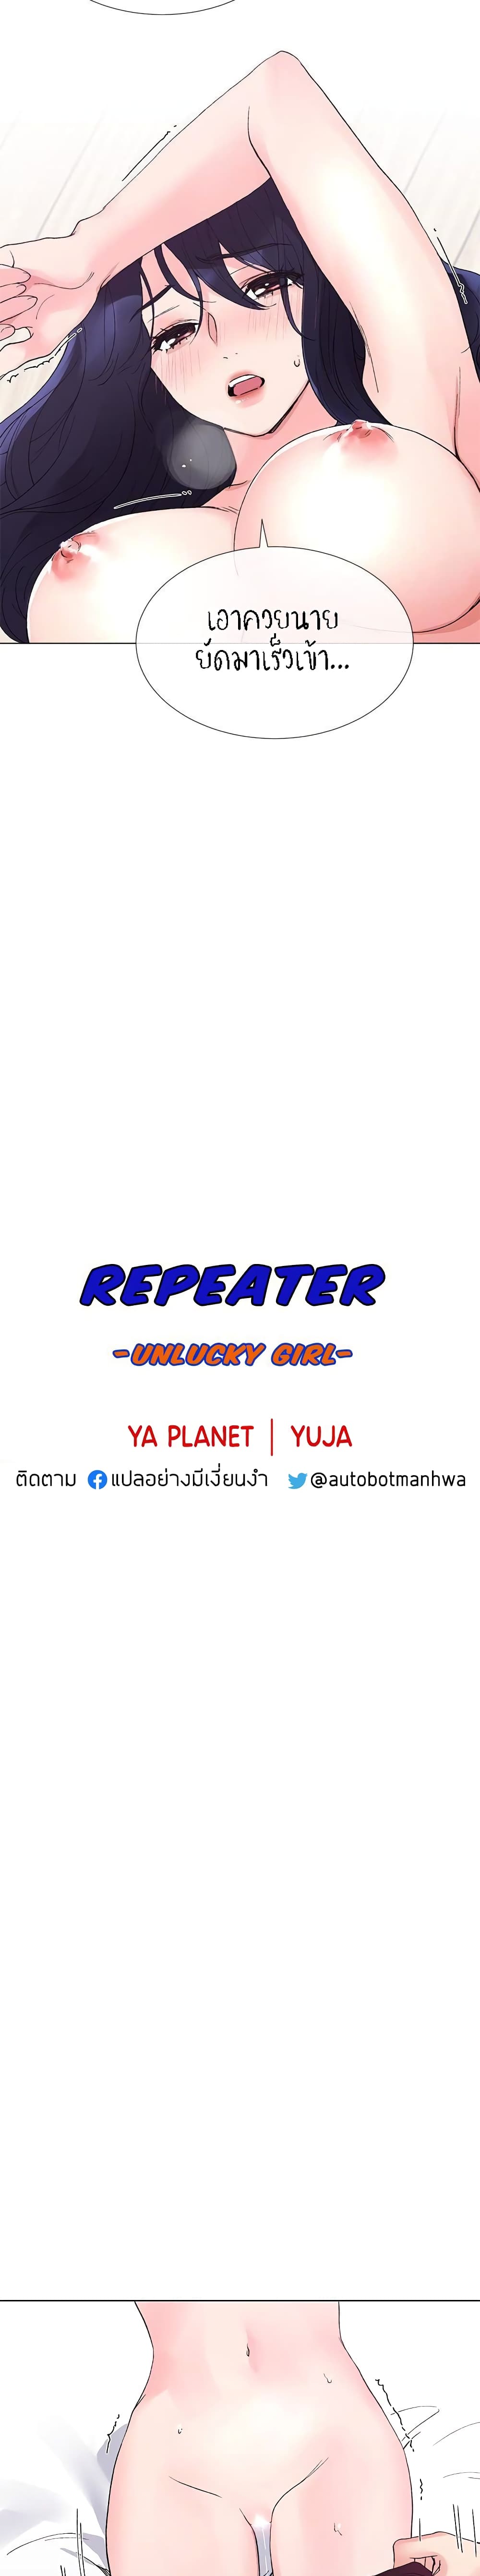 Repeater 36-36